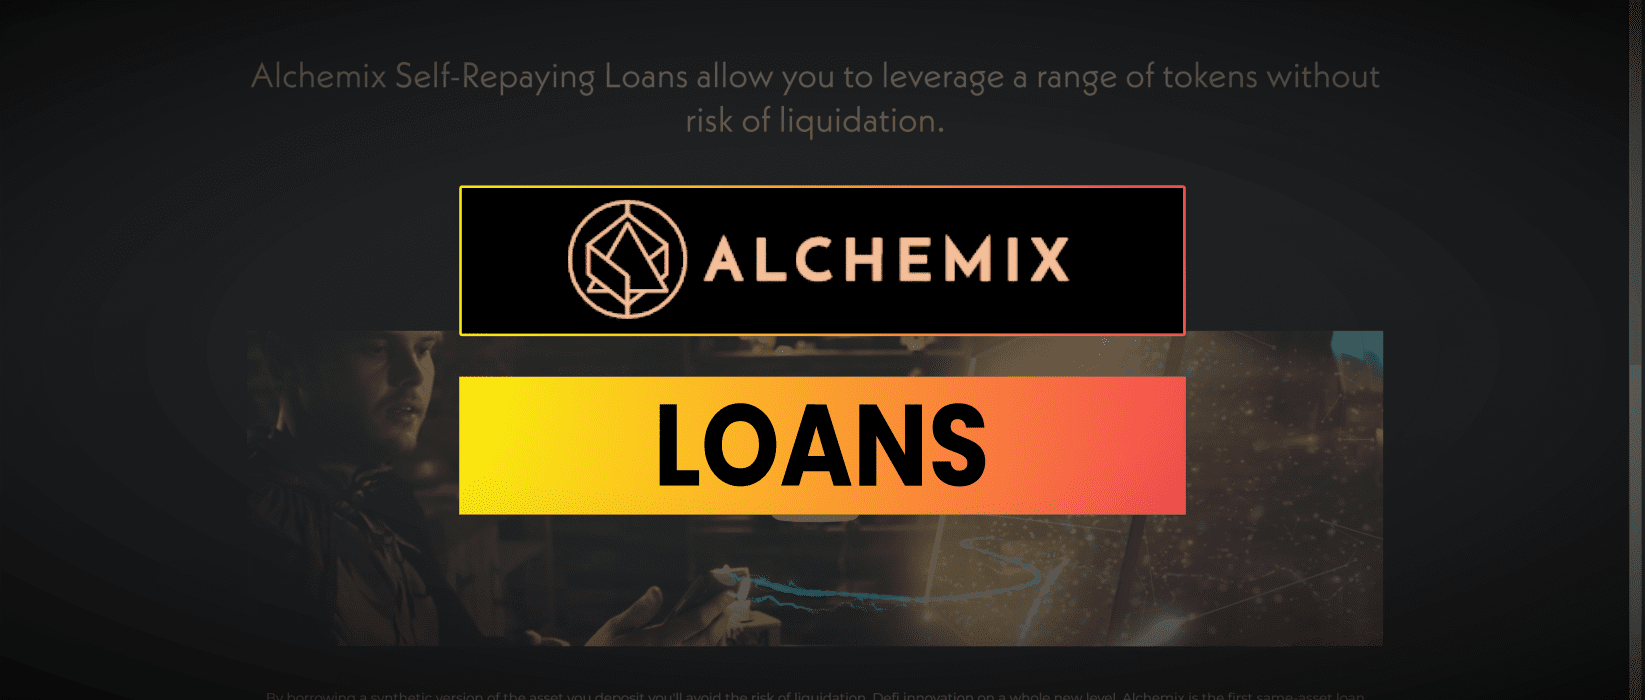 Alchemix Self-Repaying Loans